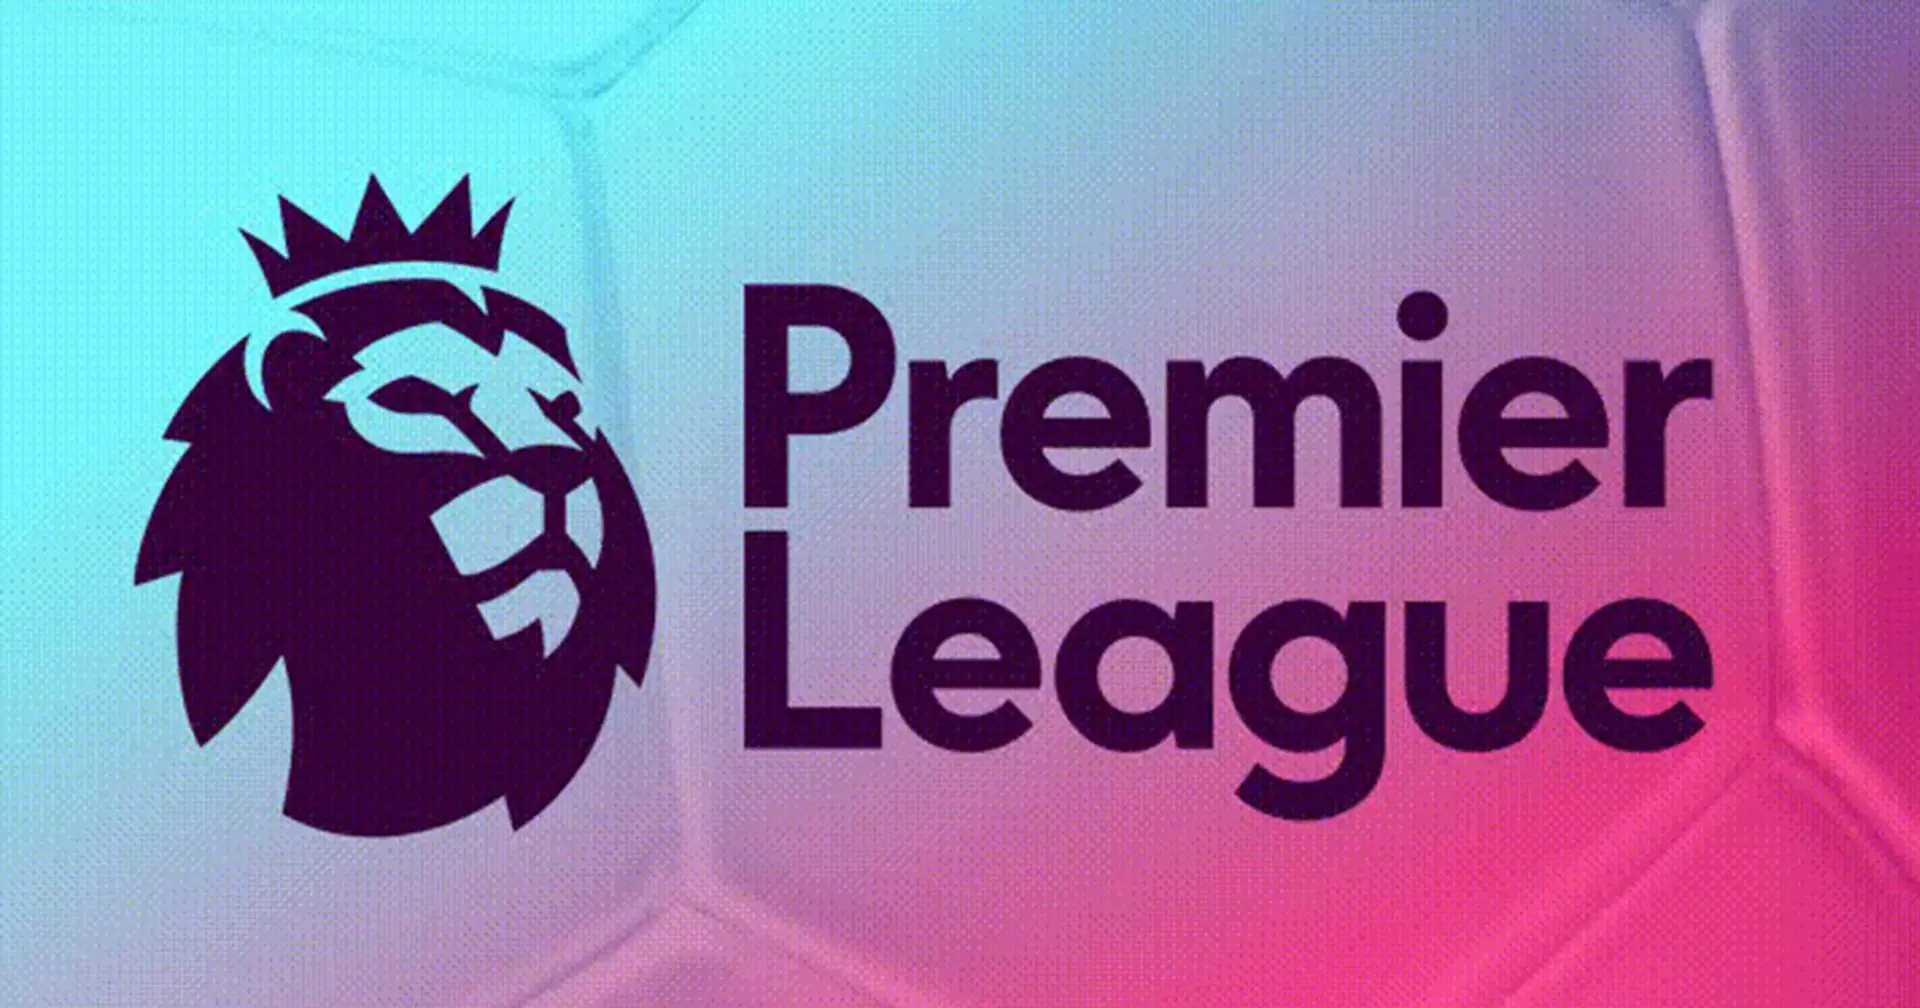 Telegraph: Premier League planning to start 2020/21 season in August despite current campaign delay